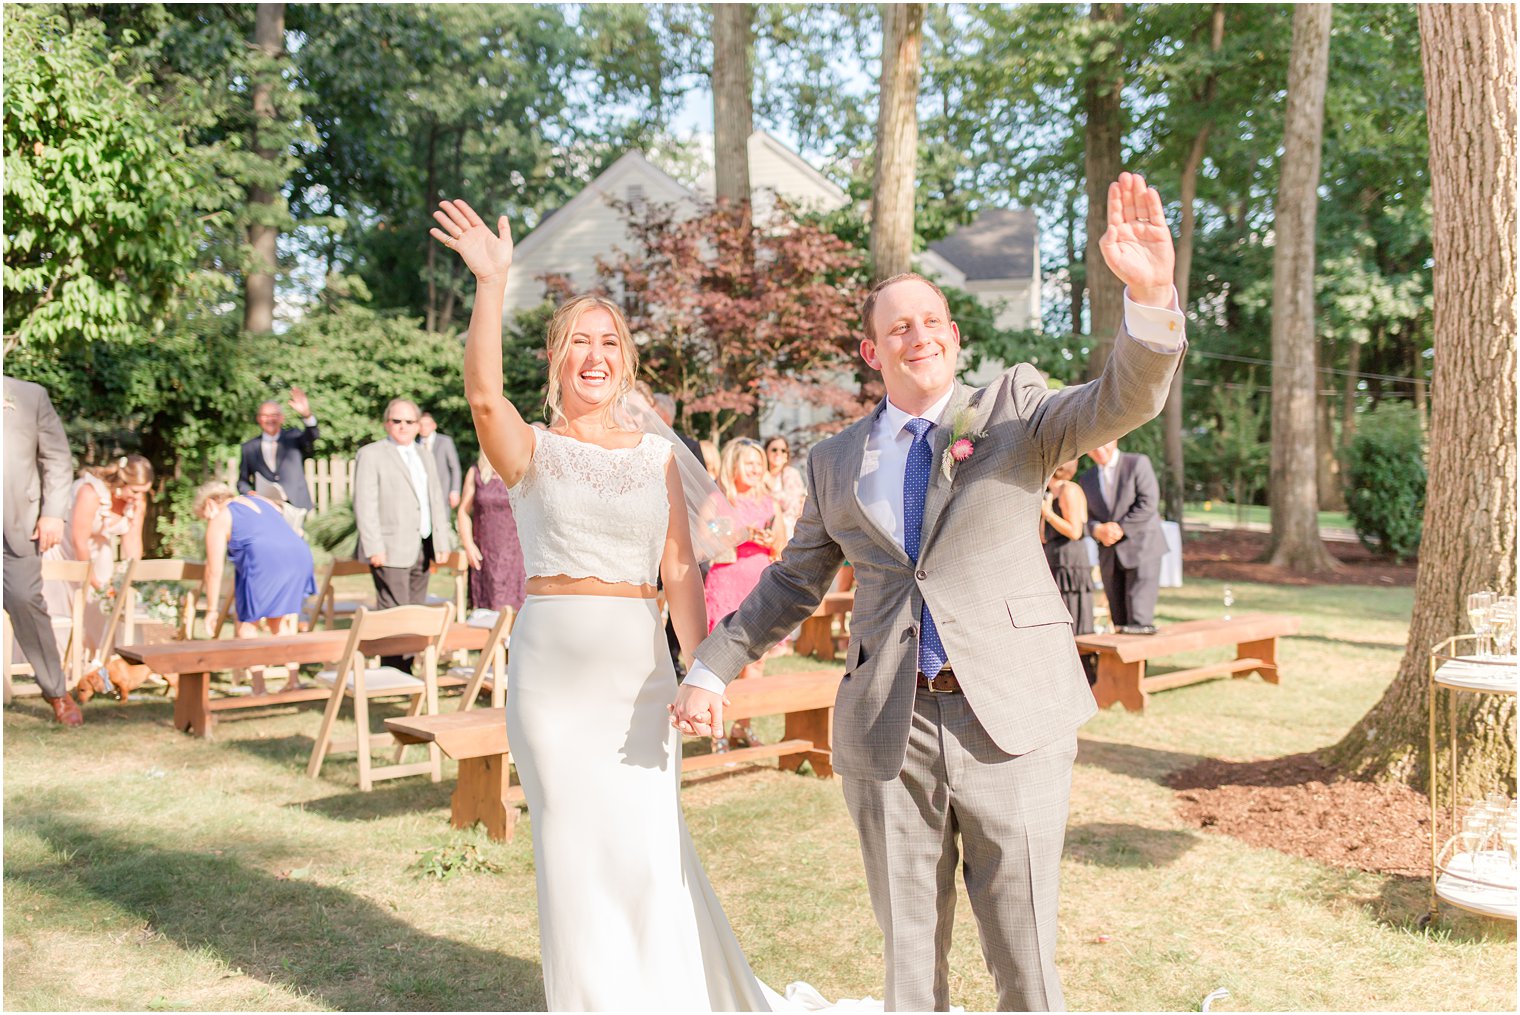 newlyweds wave after wedding ceremony in backyard